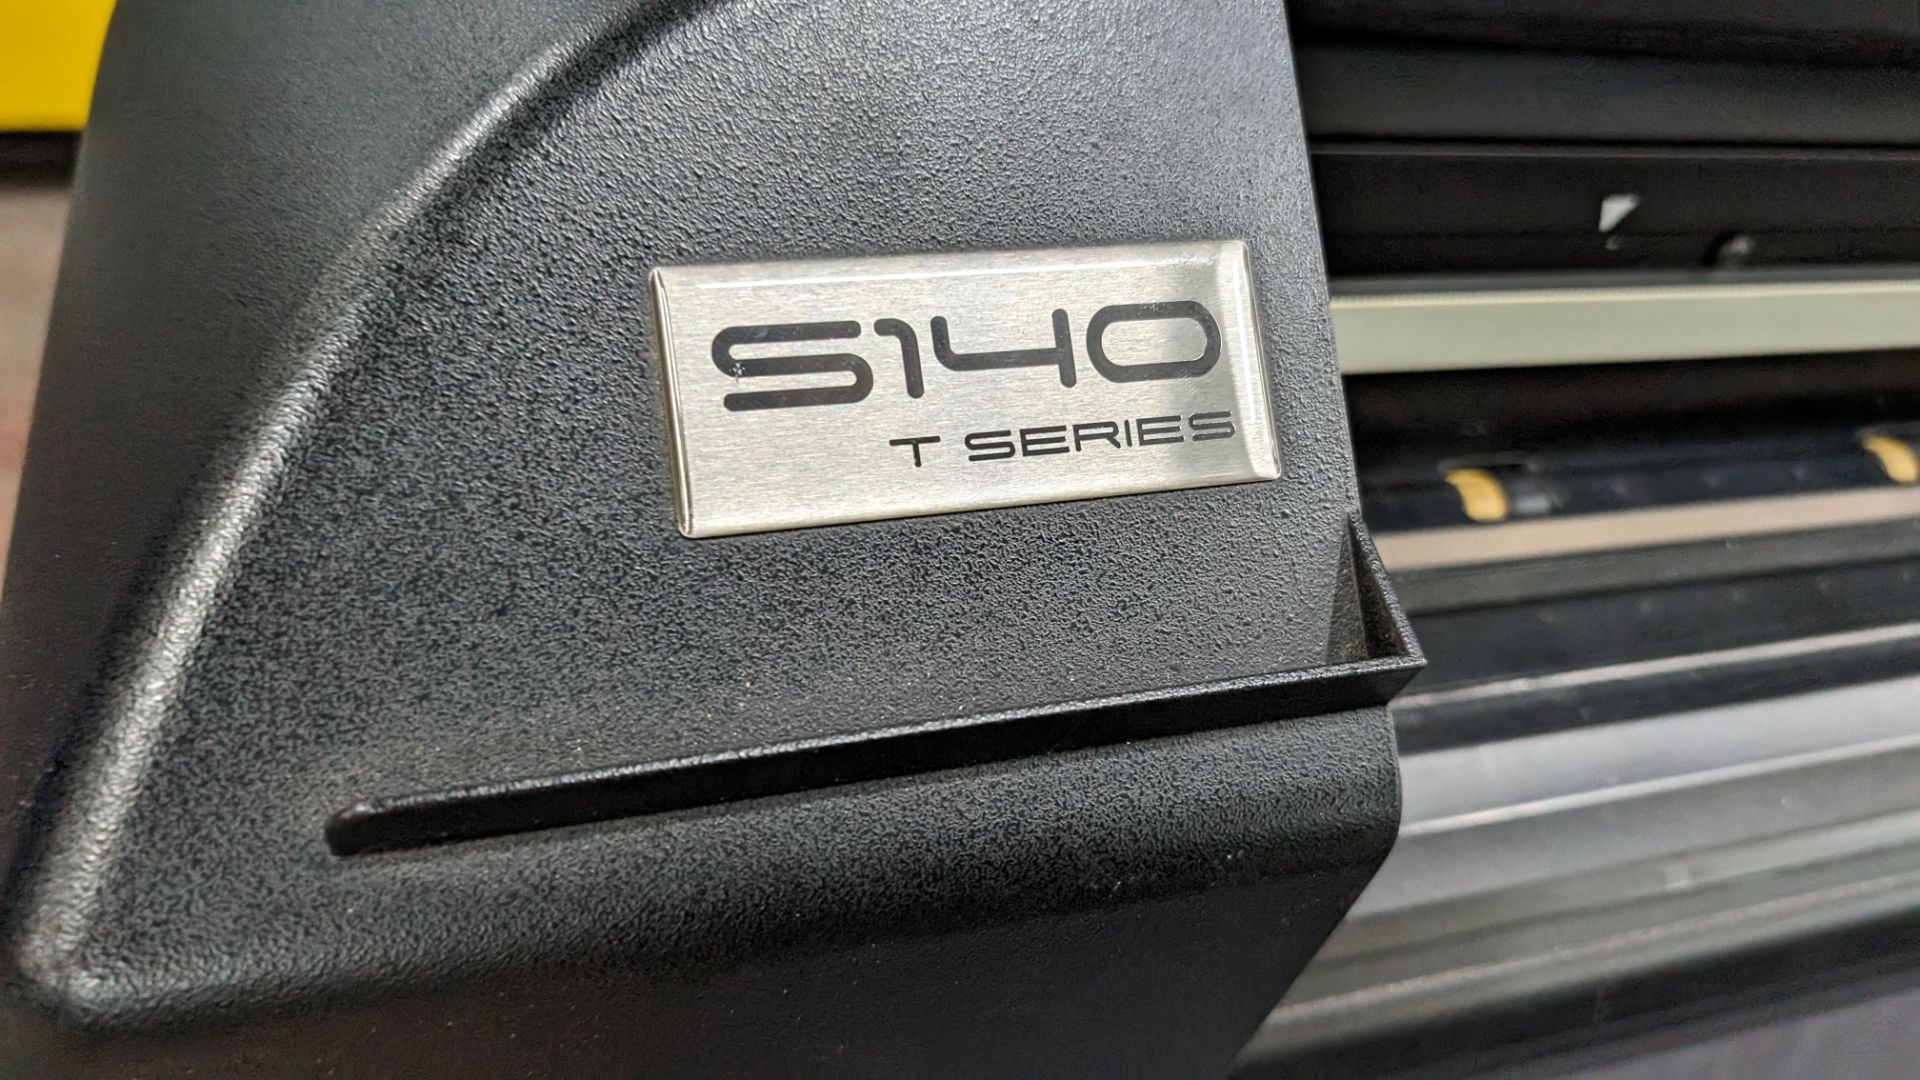 Summa S140 T-series vinyl cutter, 1400mm capacity - Image 9 of 10